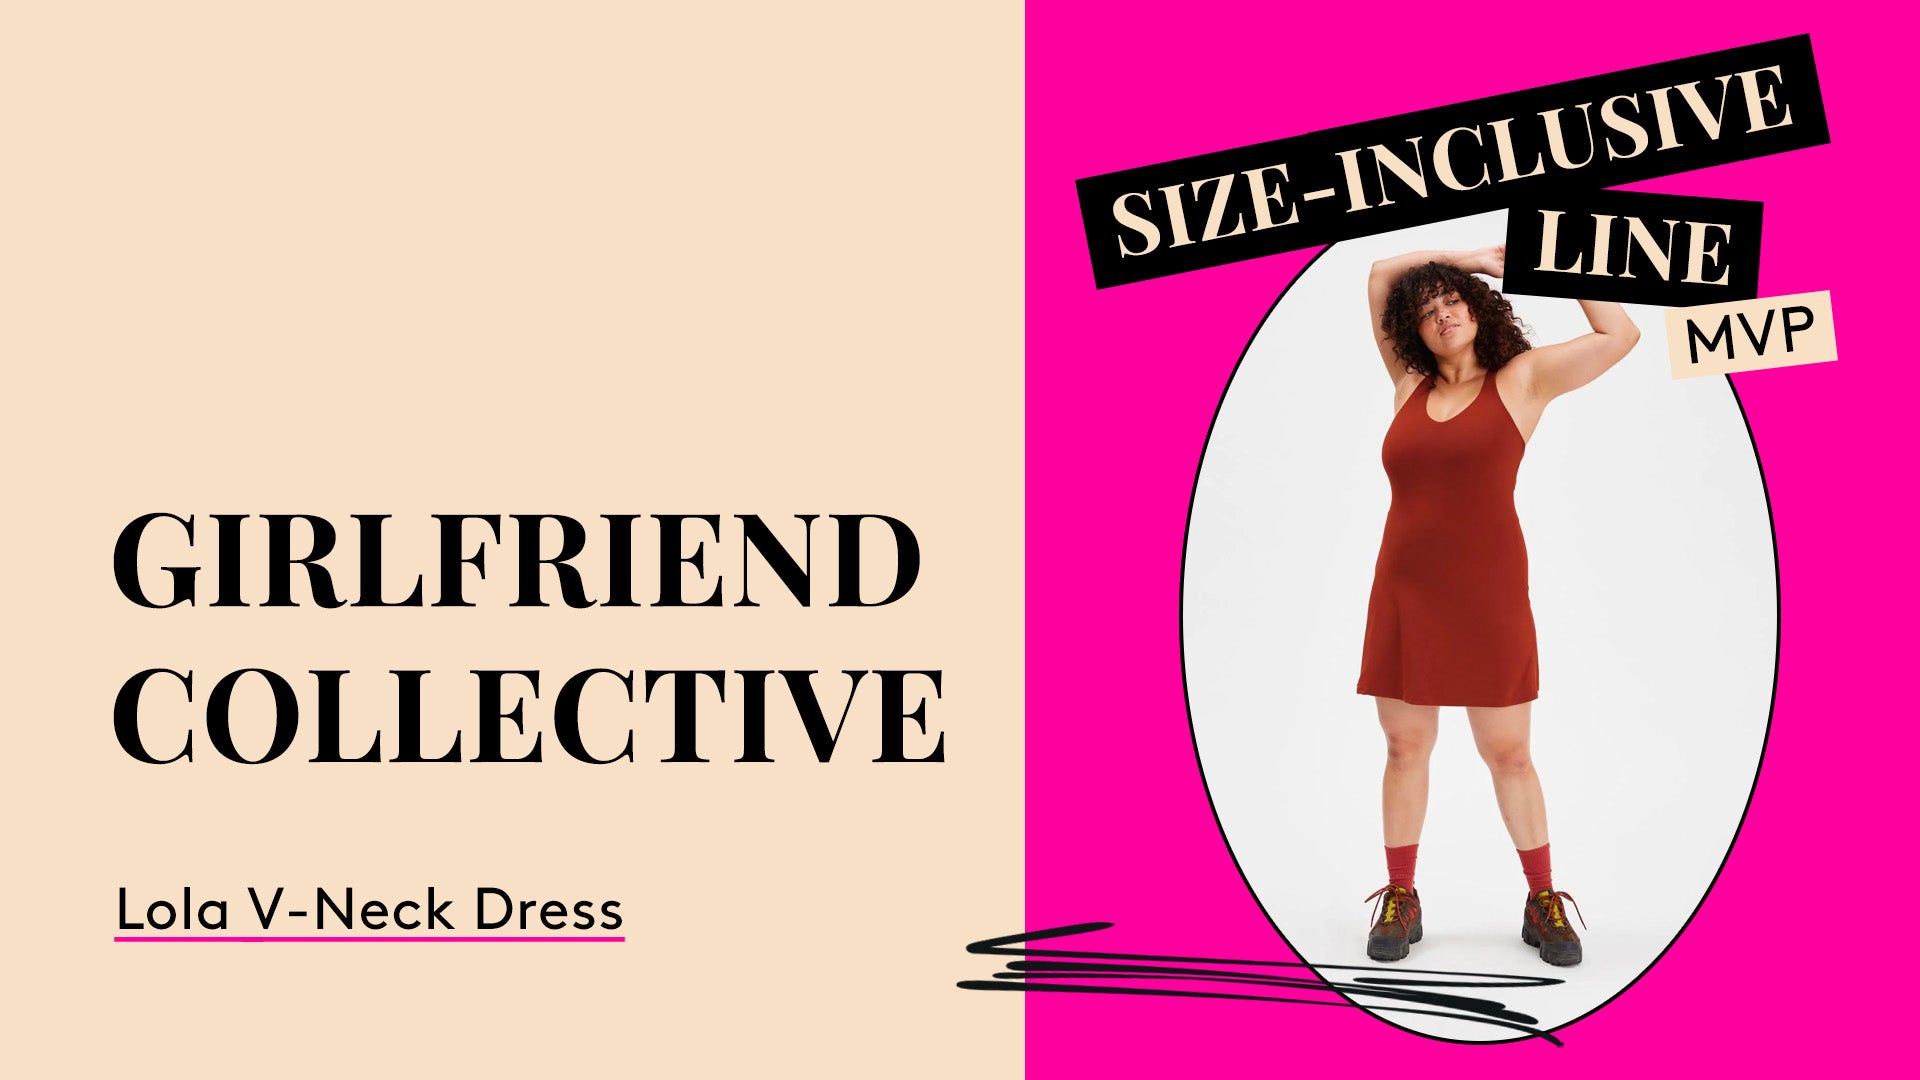 Size-Inclusive Line MVP. Girlfriend Collective Lola V-Neck Dress.